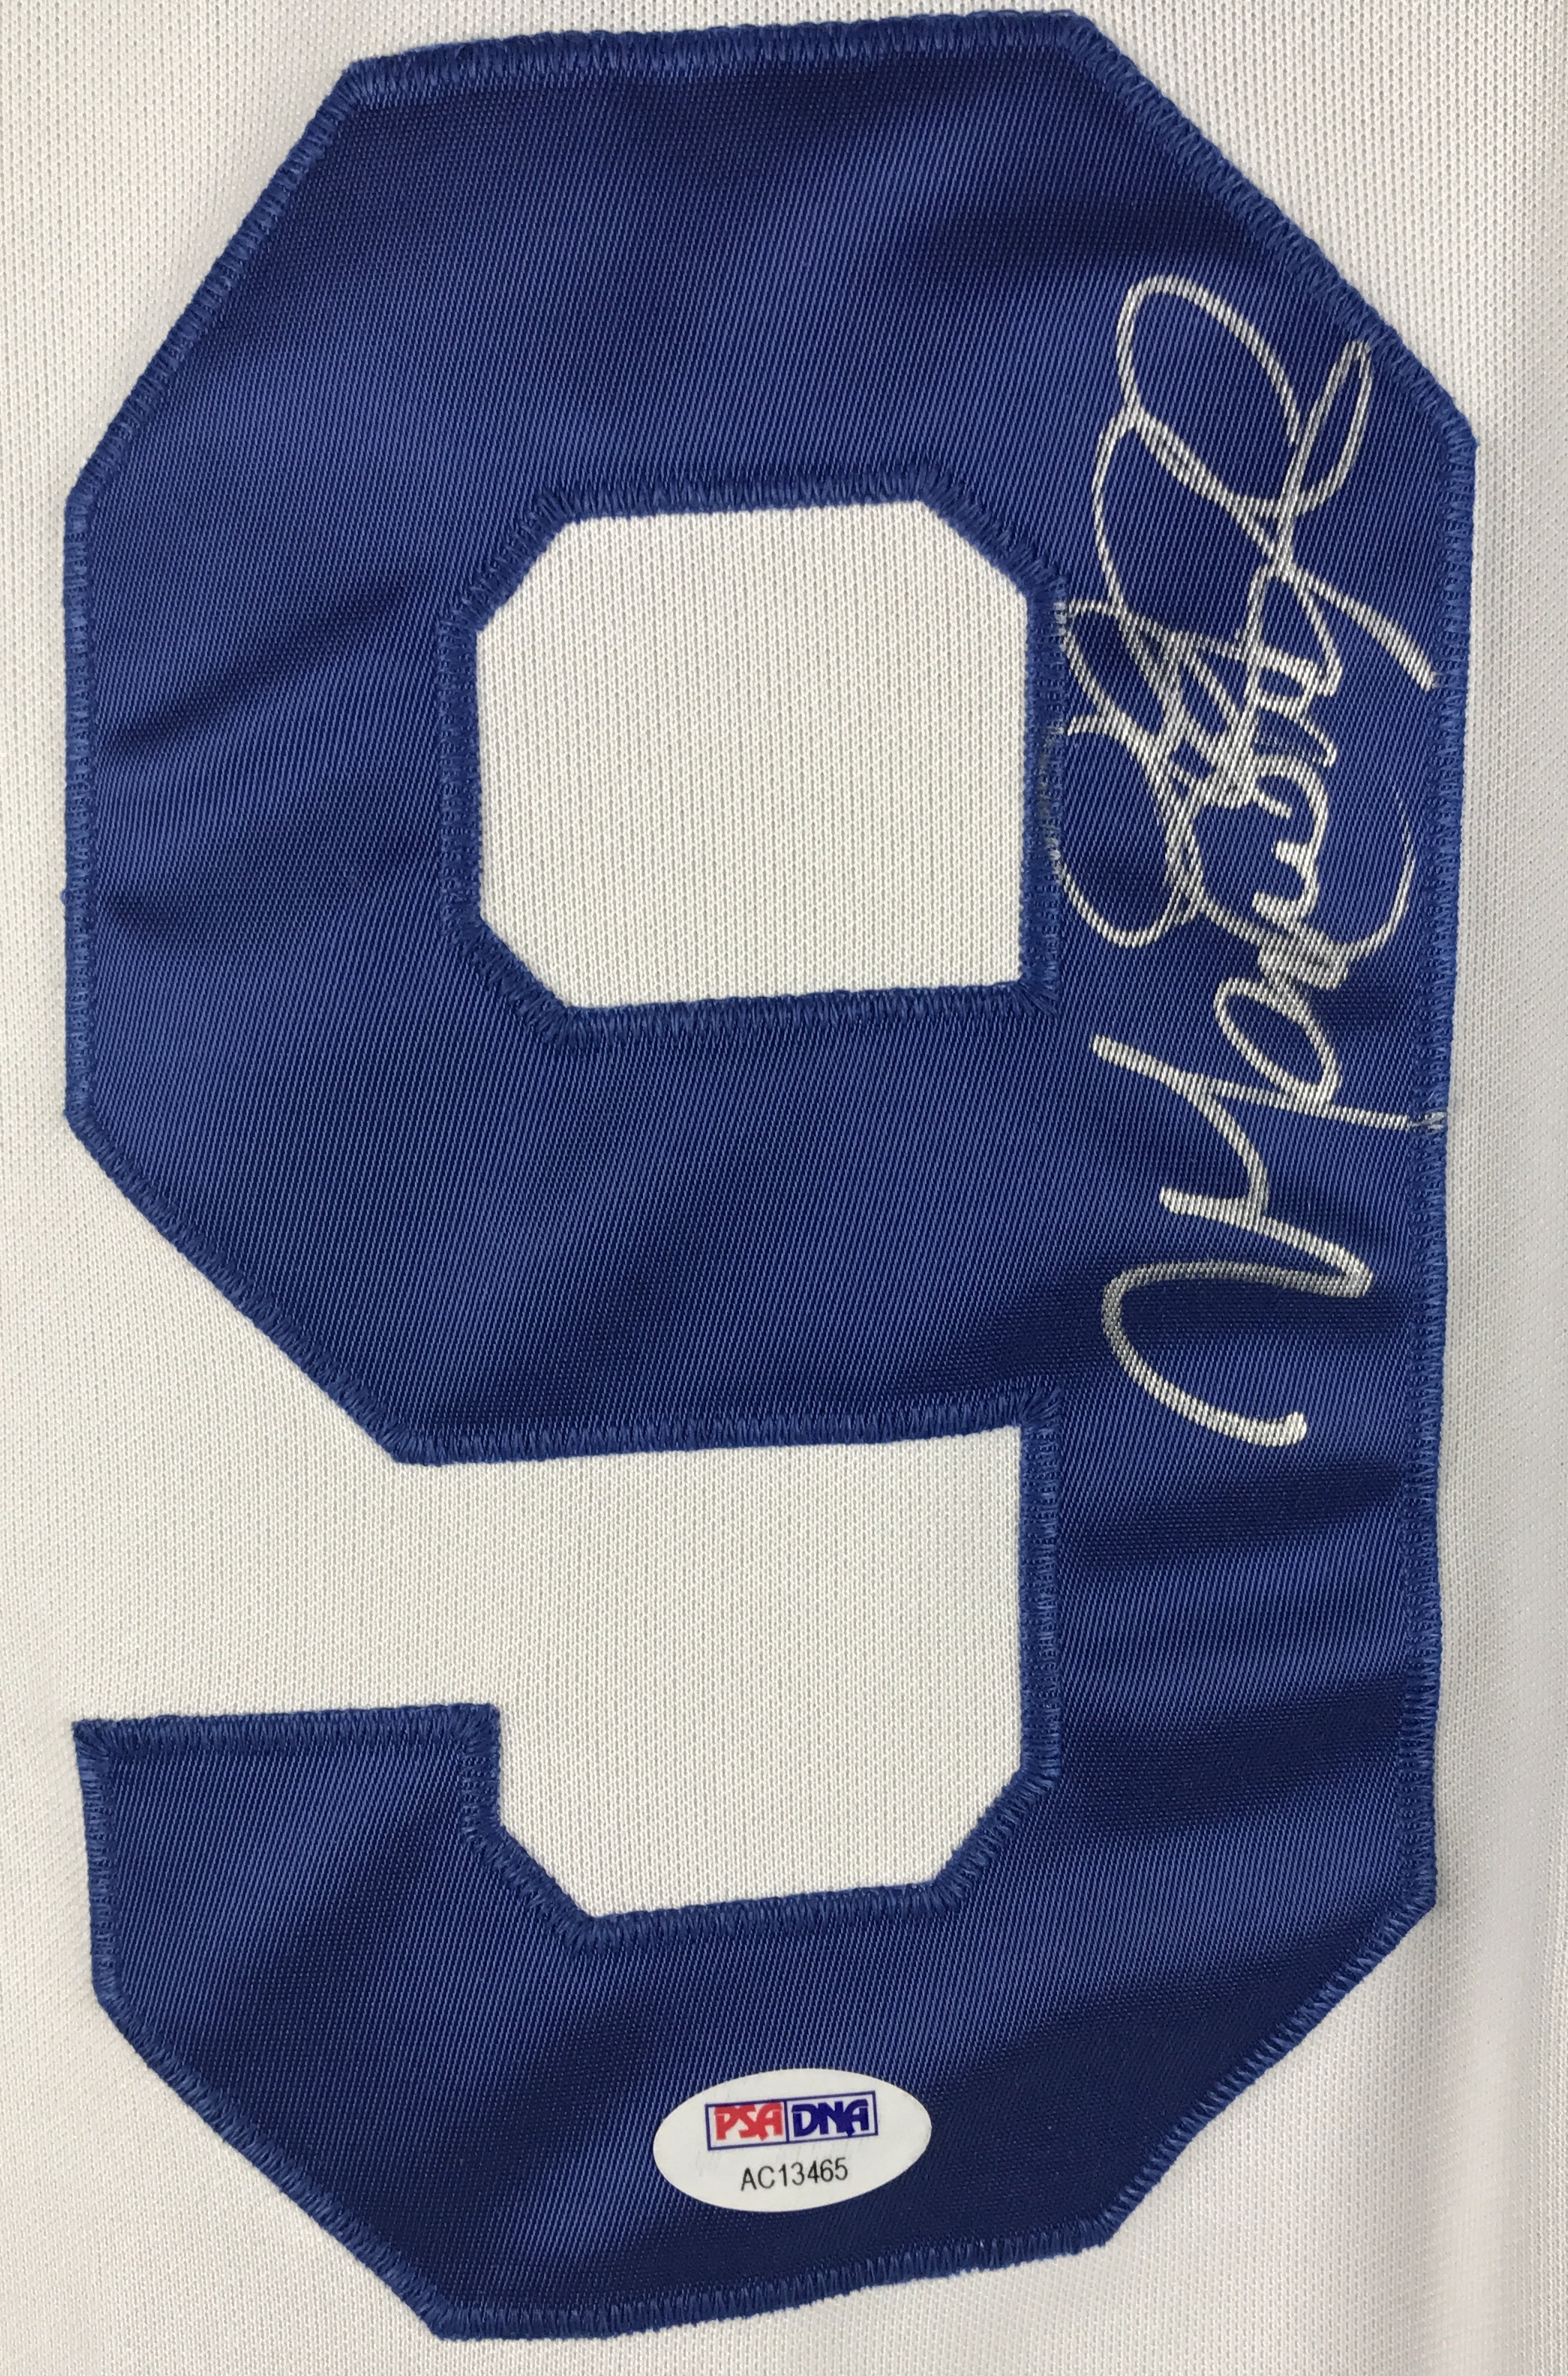 Lot Detail - Manny Ramirez Signed LA Dodgers Jersey (PSA/DNA)